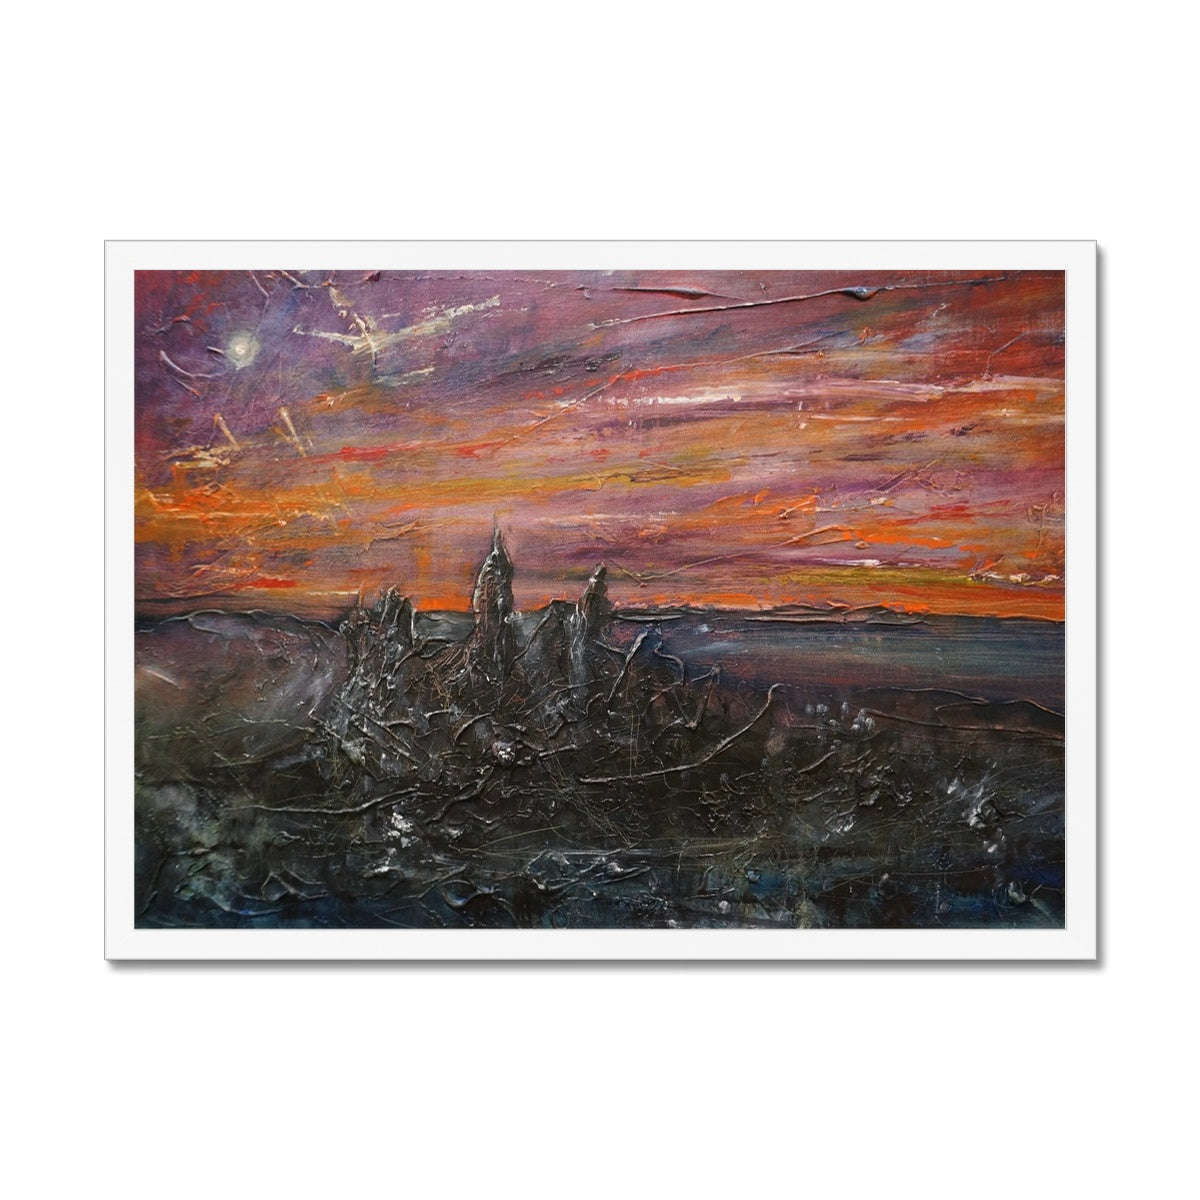 Storr Moonlight Skye Painting | Framed Prints From Scotland-Framed Prints-Skye Art Gallery-A2 Landscape-White Frame-Paintings, Prints, Homeware, Art Gifts From Scotland By Scottish Artist Kevin Hunter